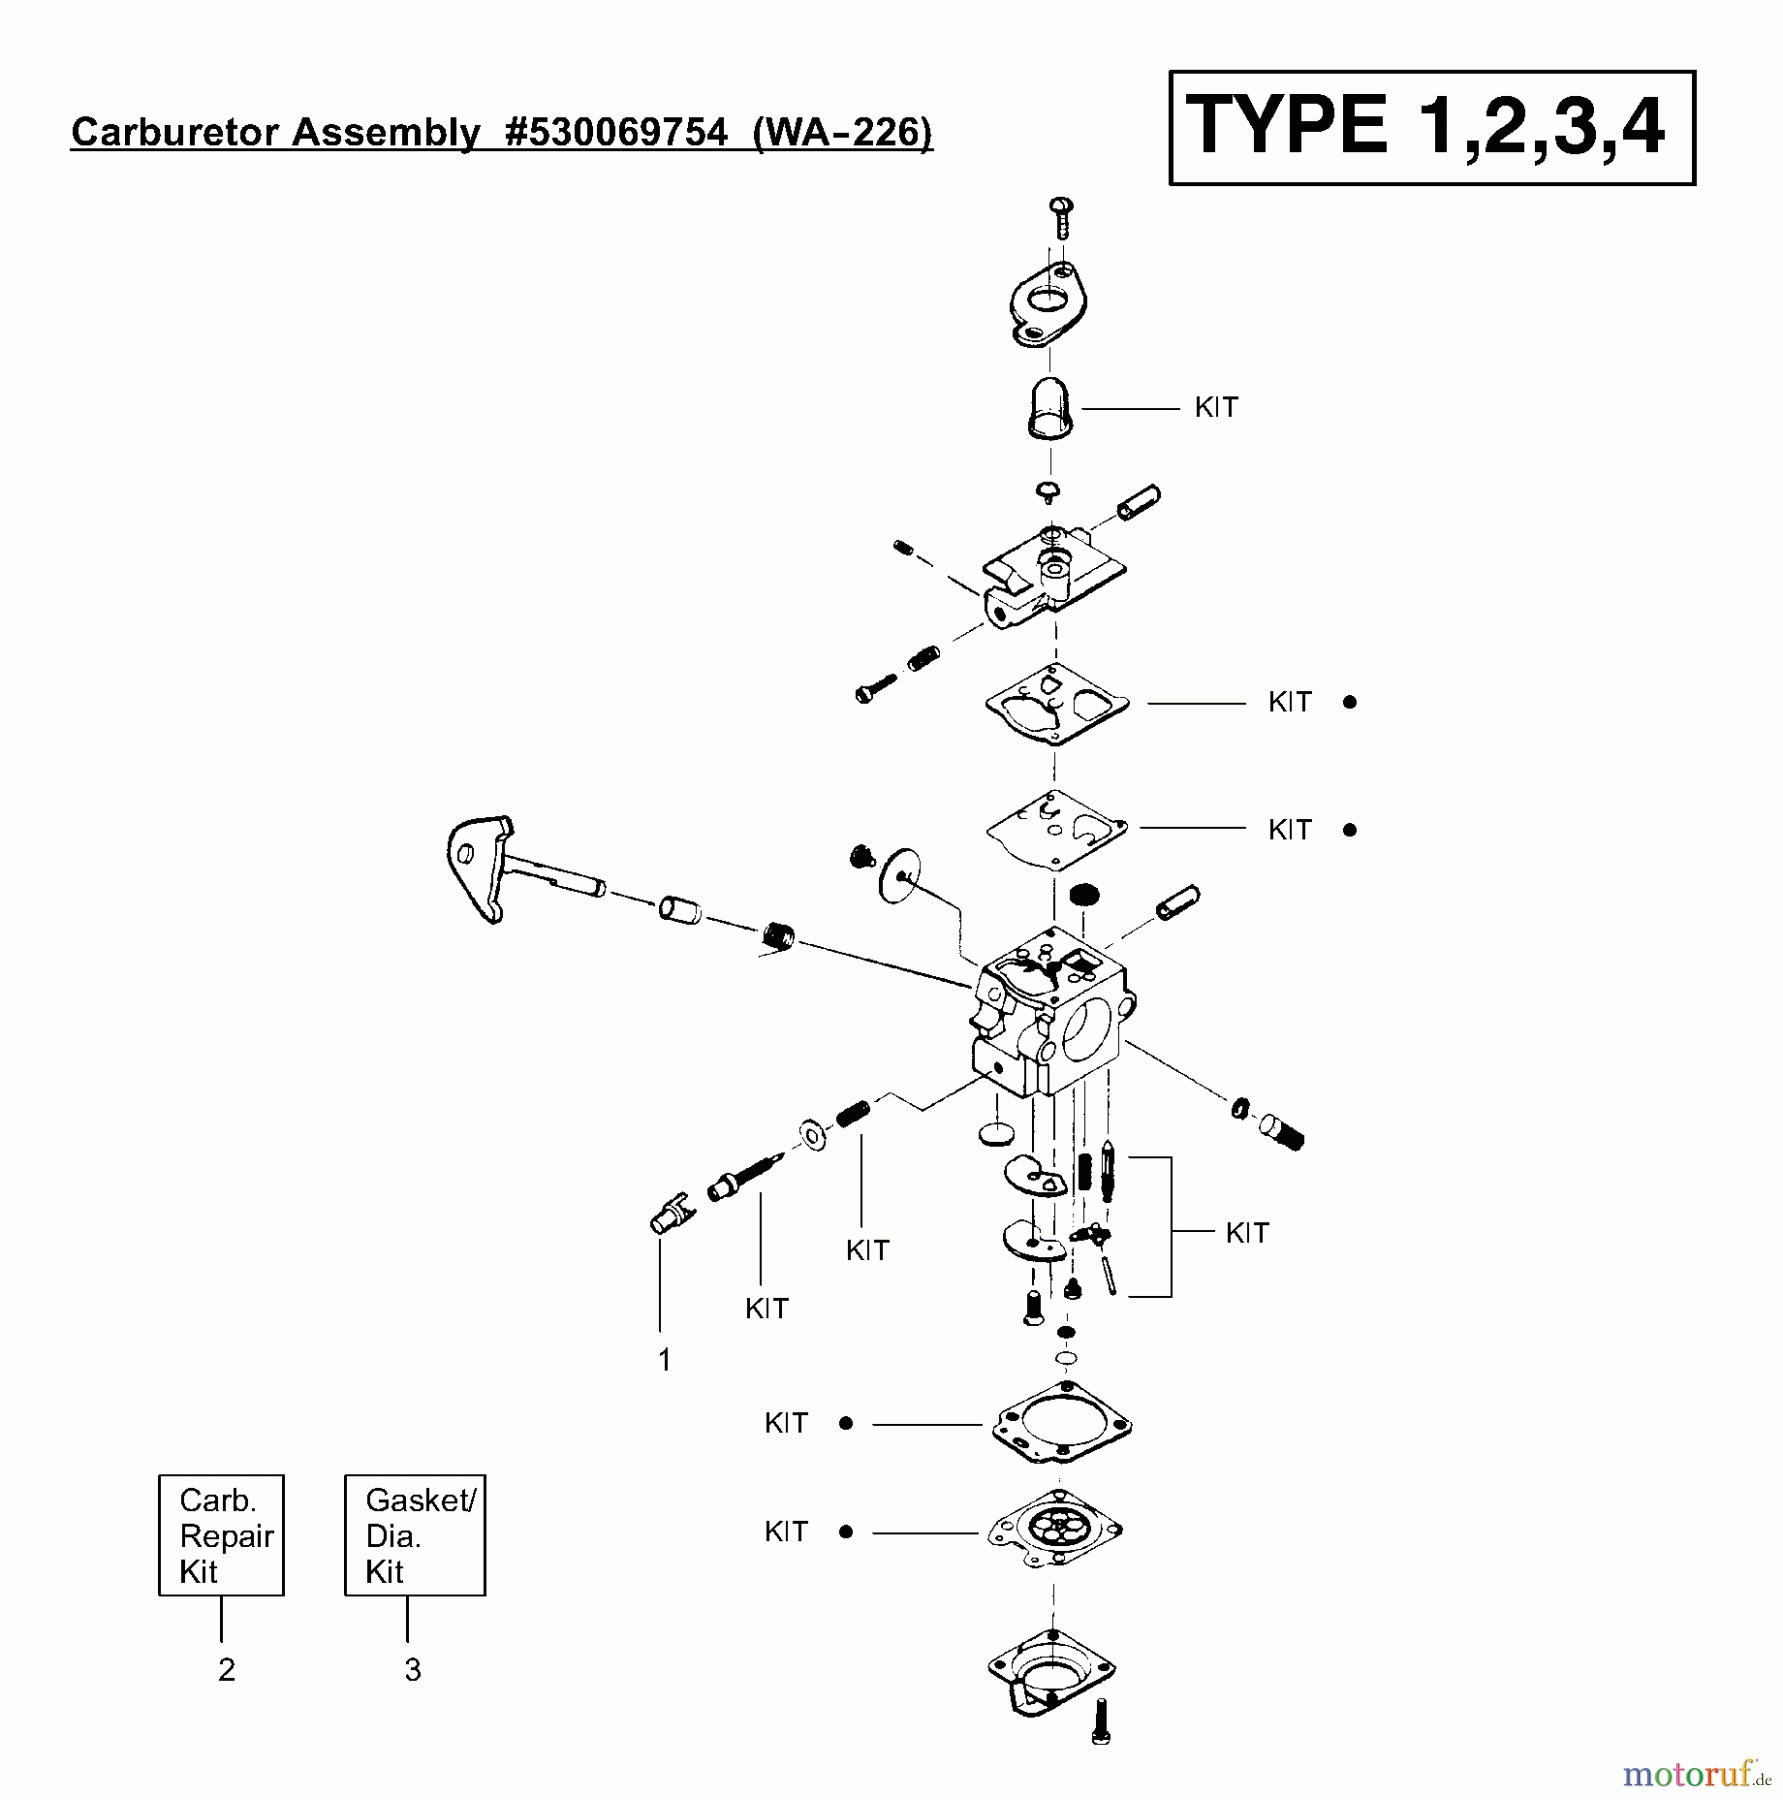  Poulan / Weed Eater Motorsensen, Trimmer TE500CXL (Type 1) - Weed Eater String Trimmer Carburetor Assembly (WA226) P/N 530069754